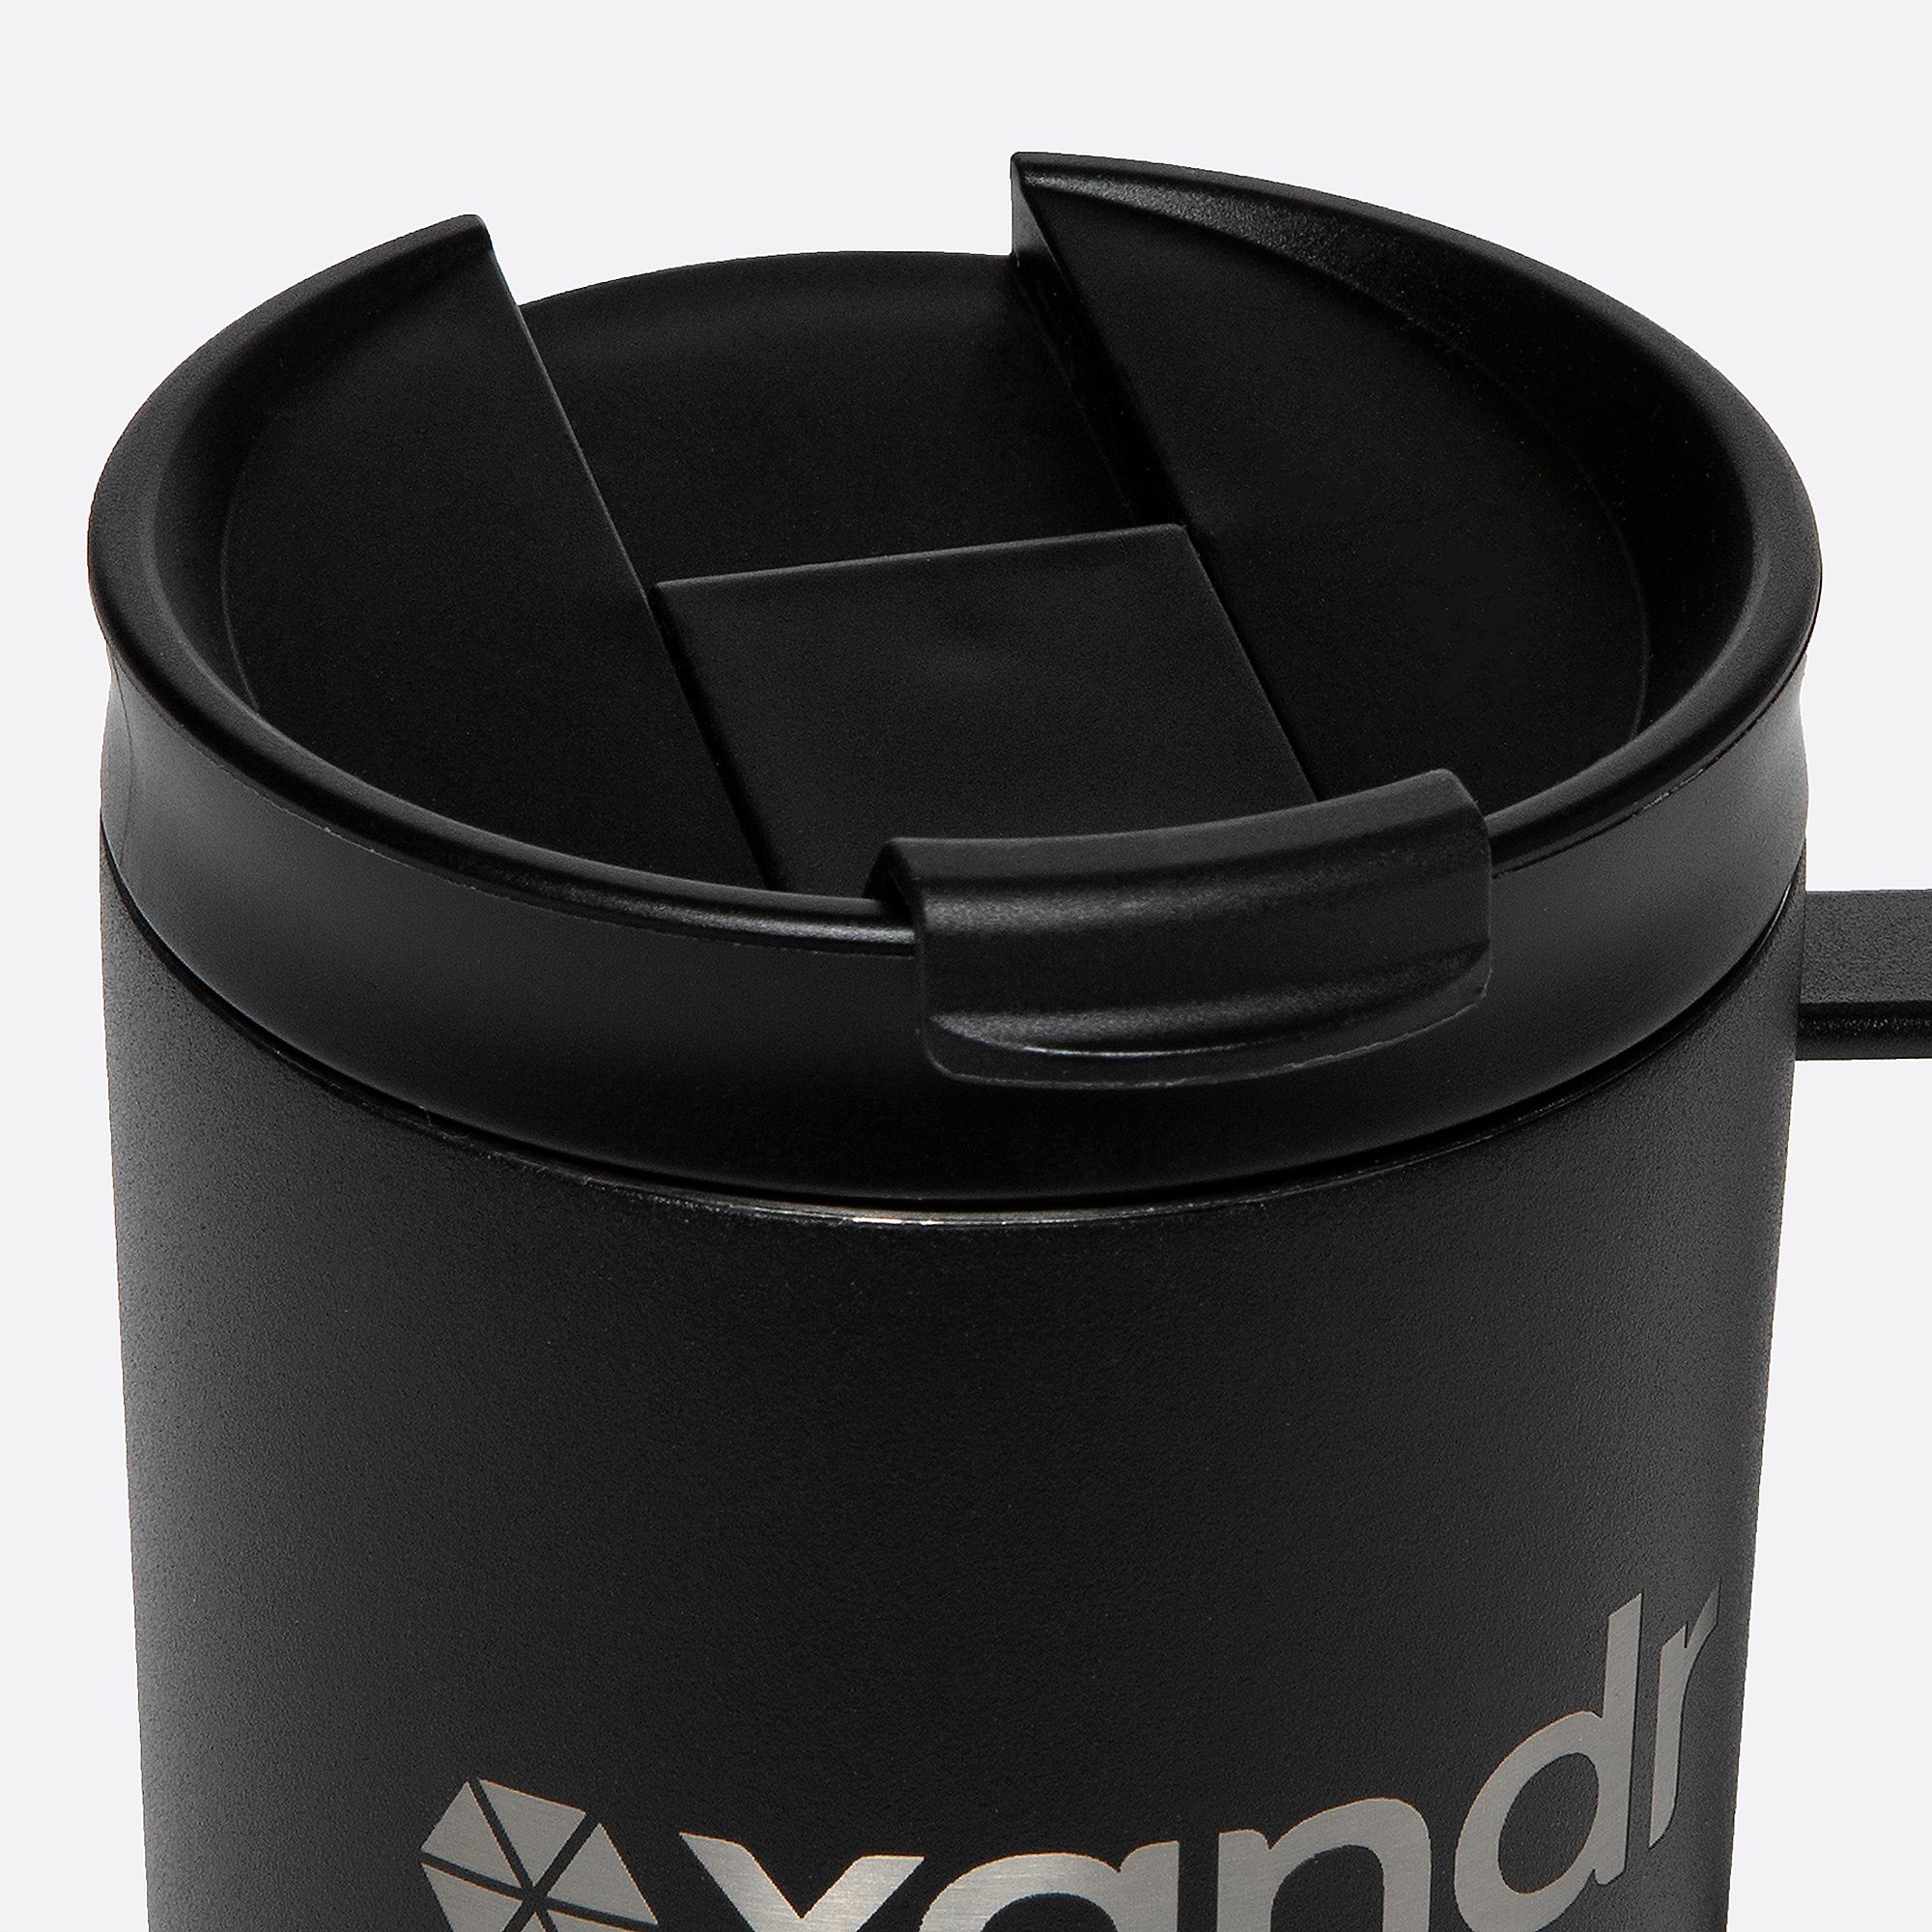 Xandr Simple Modern 12 oz Coffee Cup